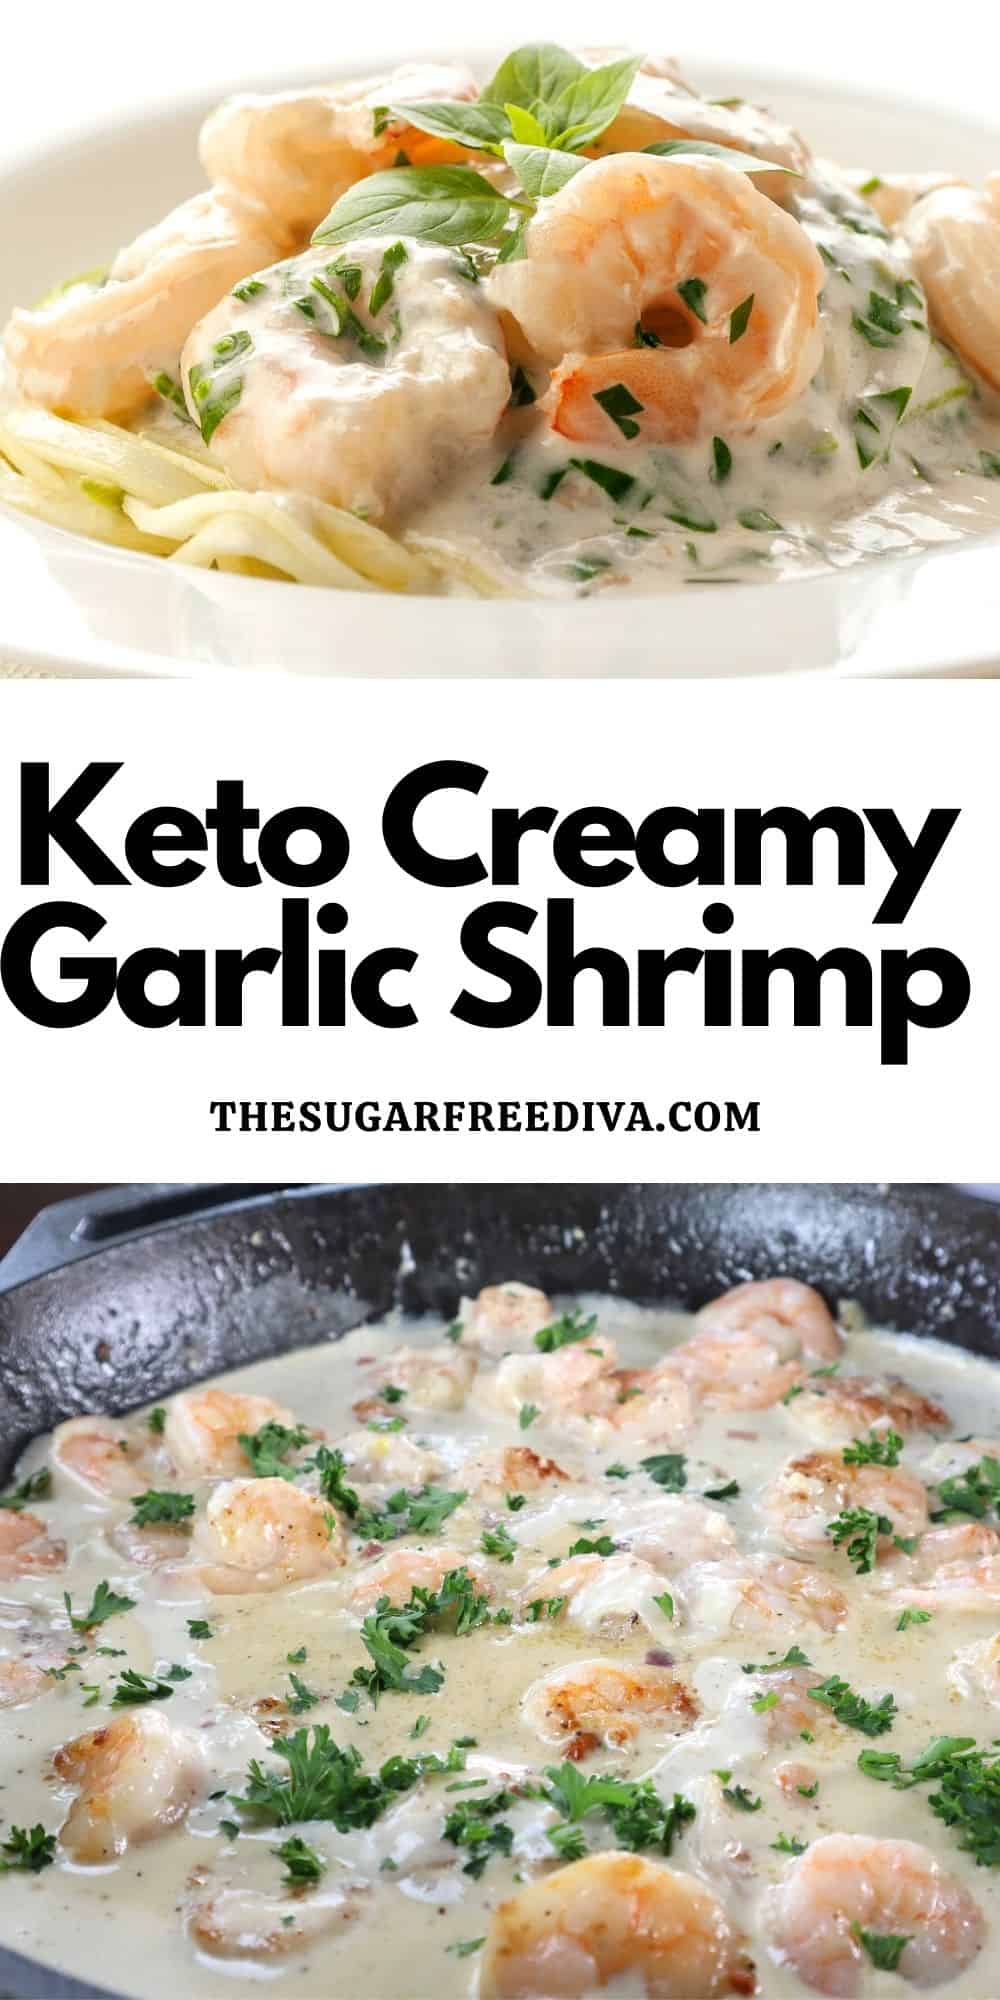 Keto Creamy Garlic Shrimp Recipe